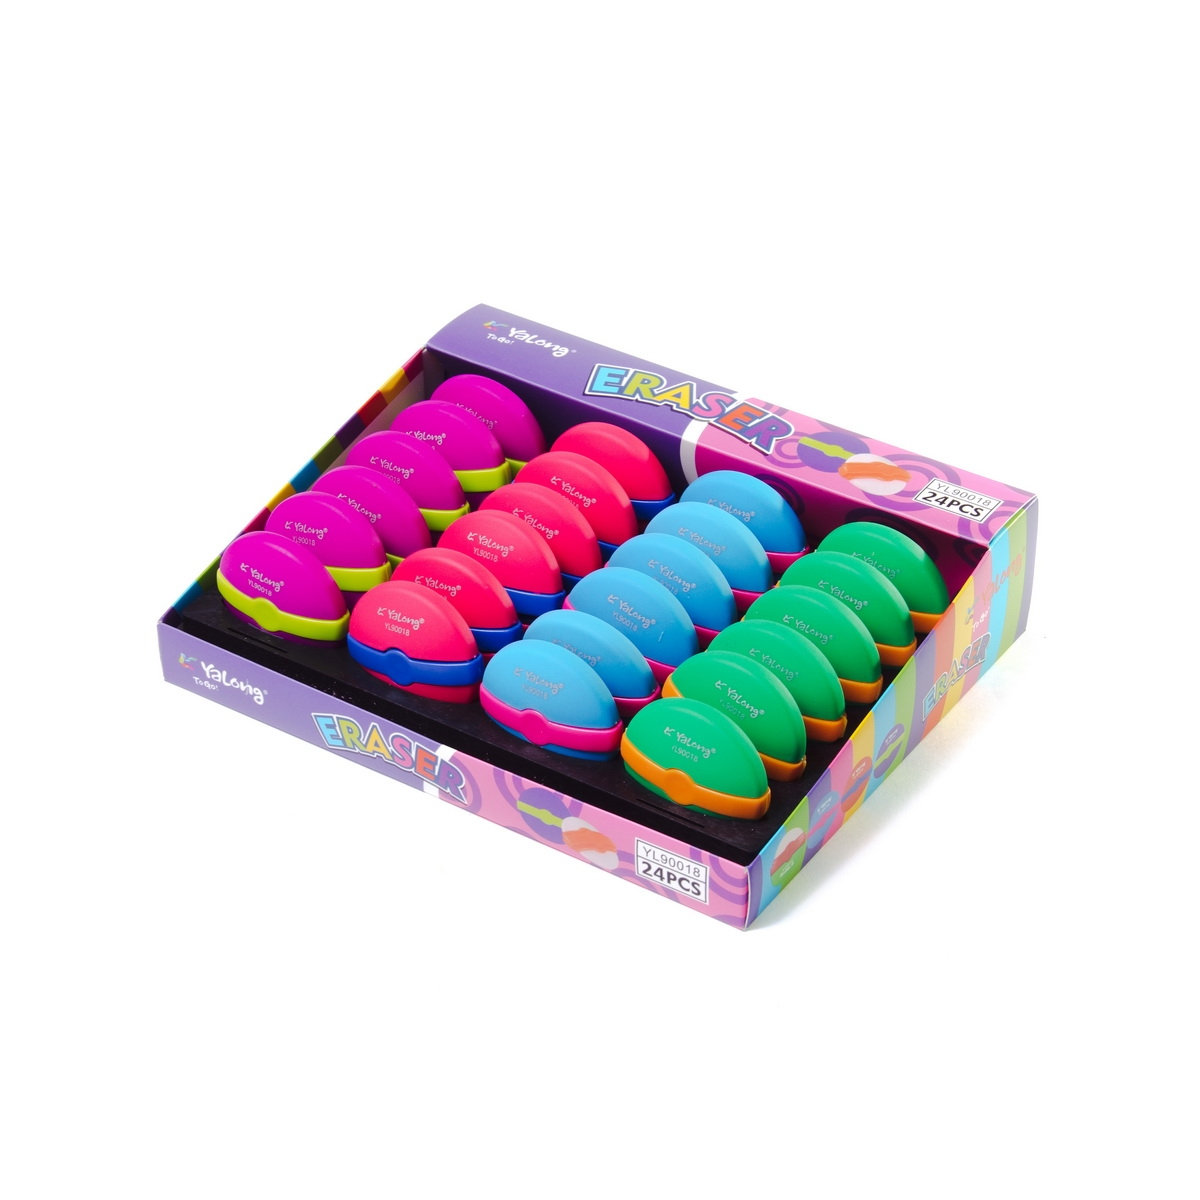 Yalong Eraser, Circular, one piece, multi colored